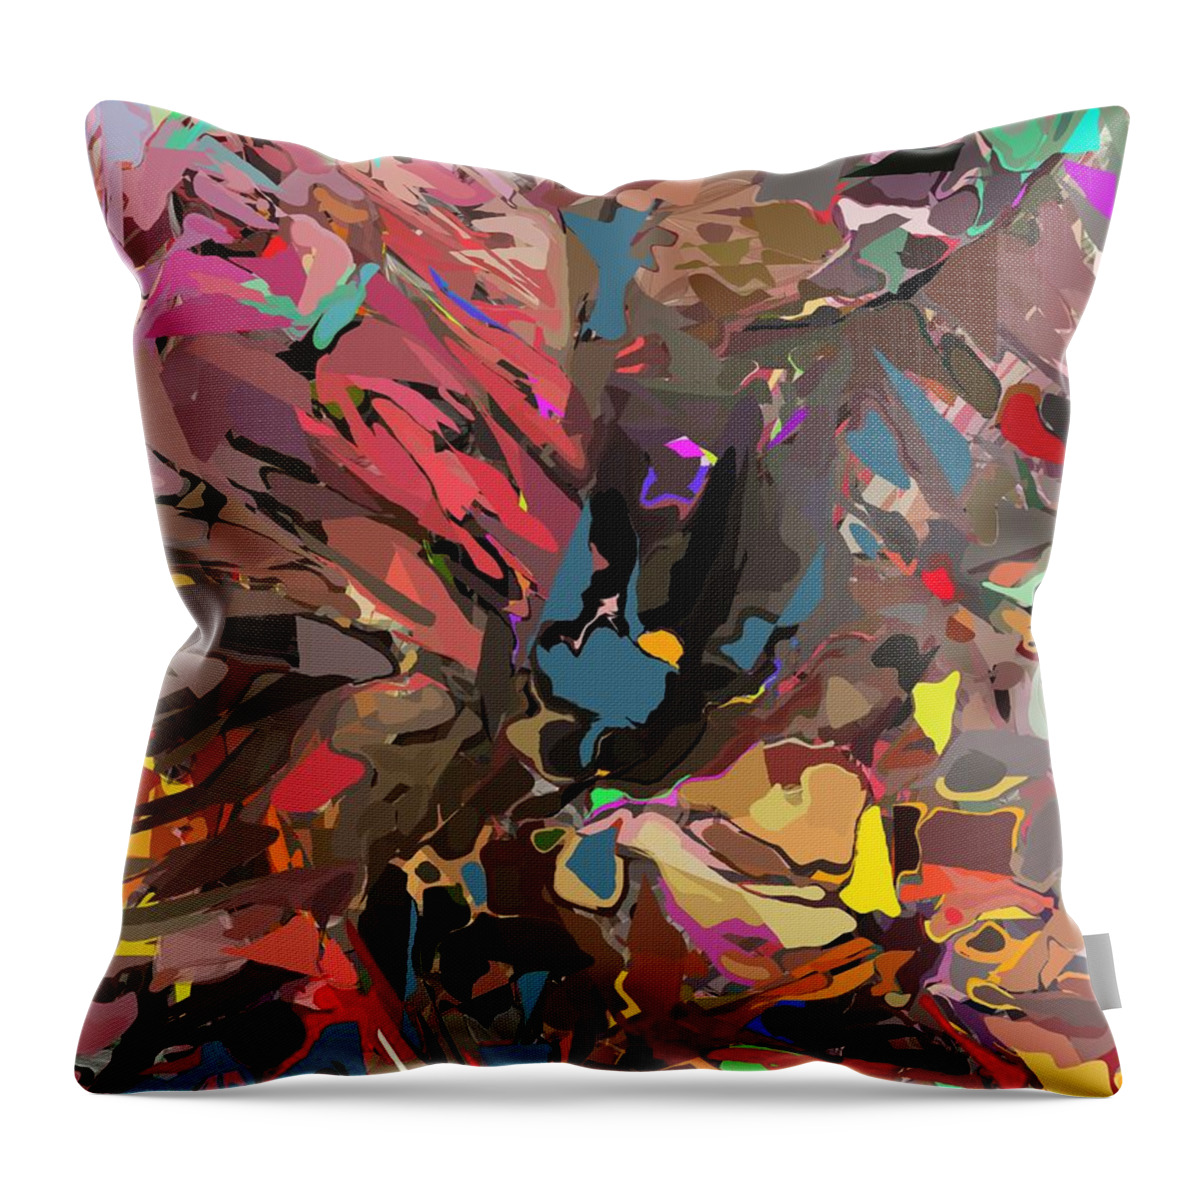 Fine Art Throw Pillow featuring the digital art Abyss 2 by David Lane